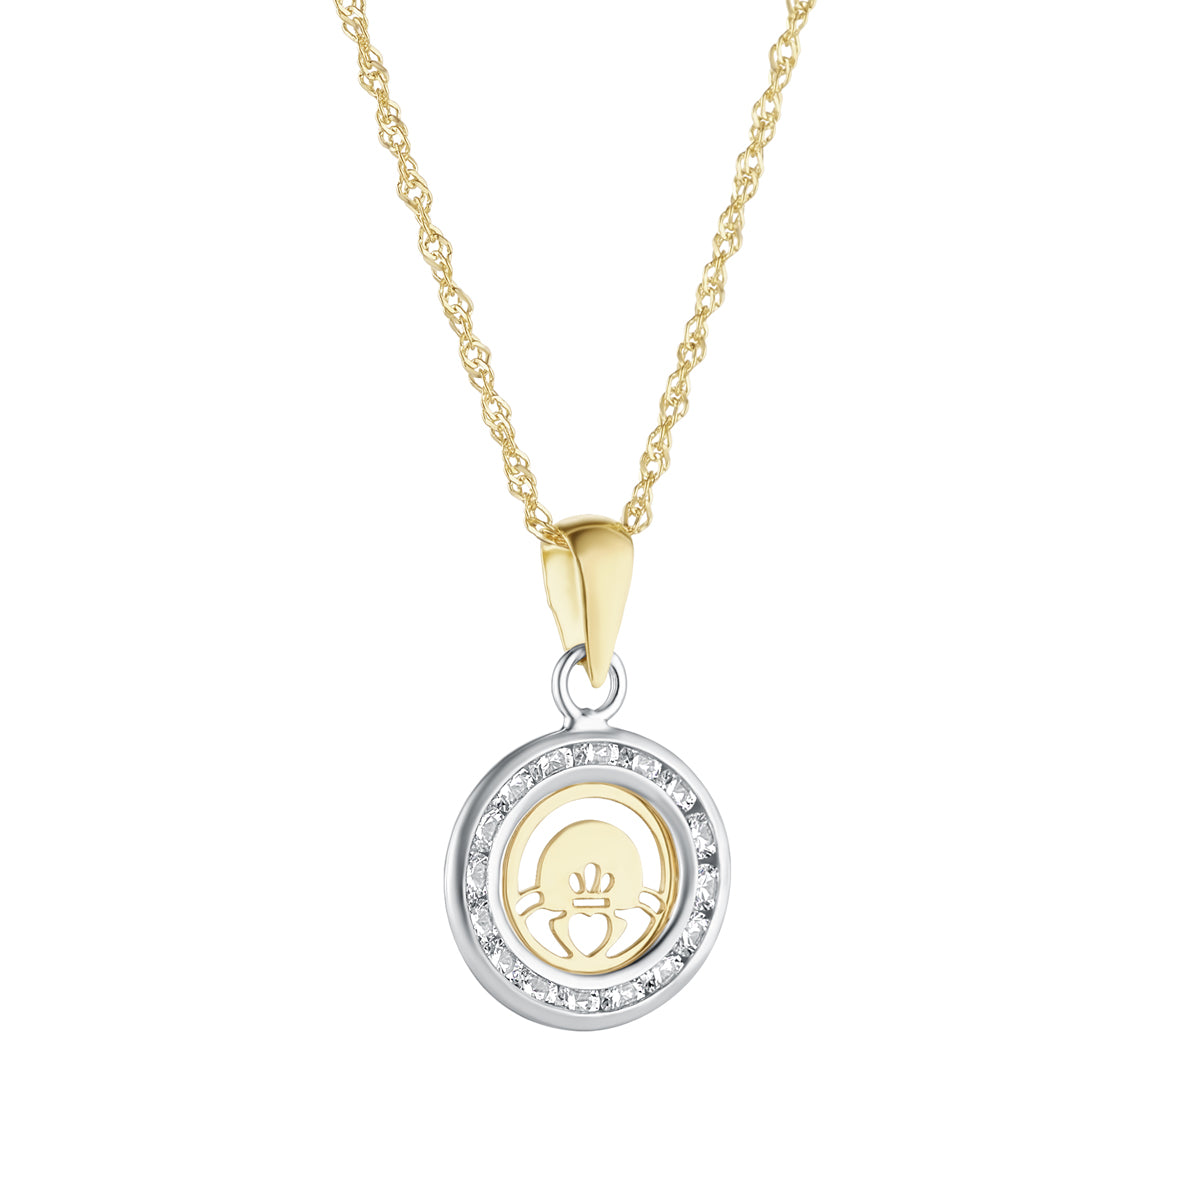 10K Gold Small Round CZ Claddagh Pendant S46976 from Solvar Irish Jewellery